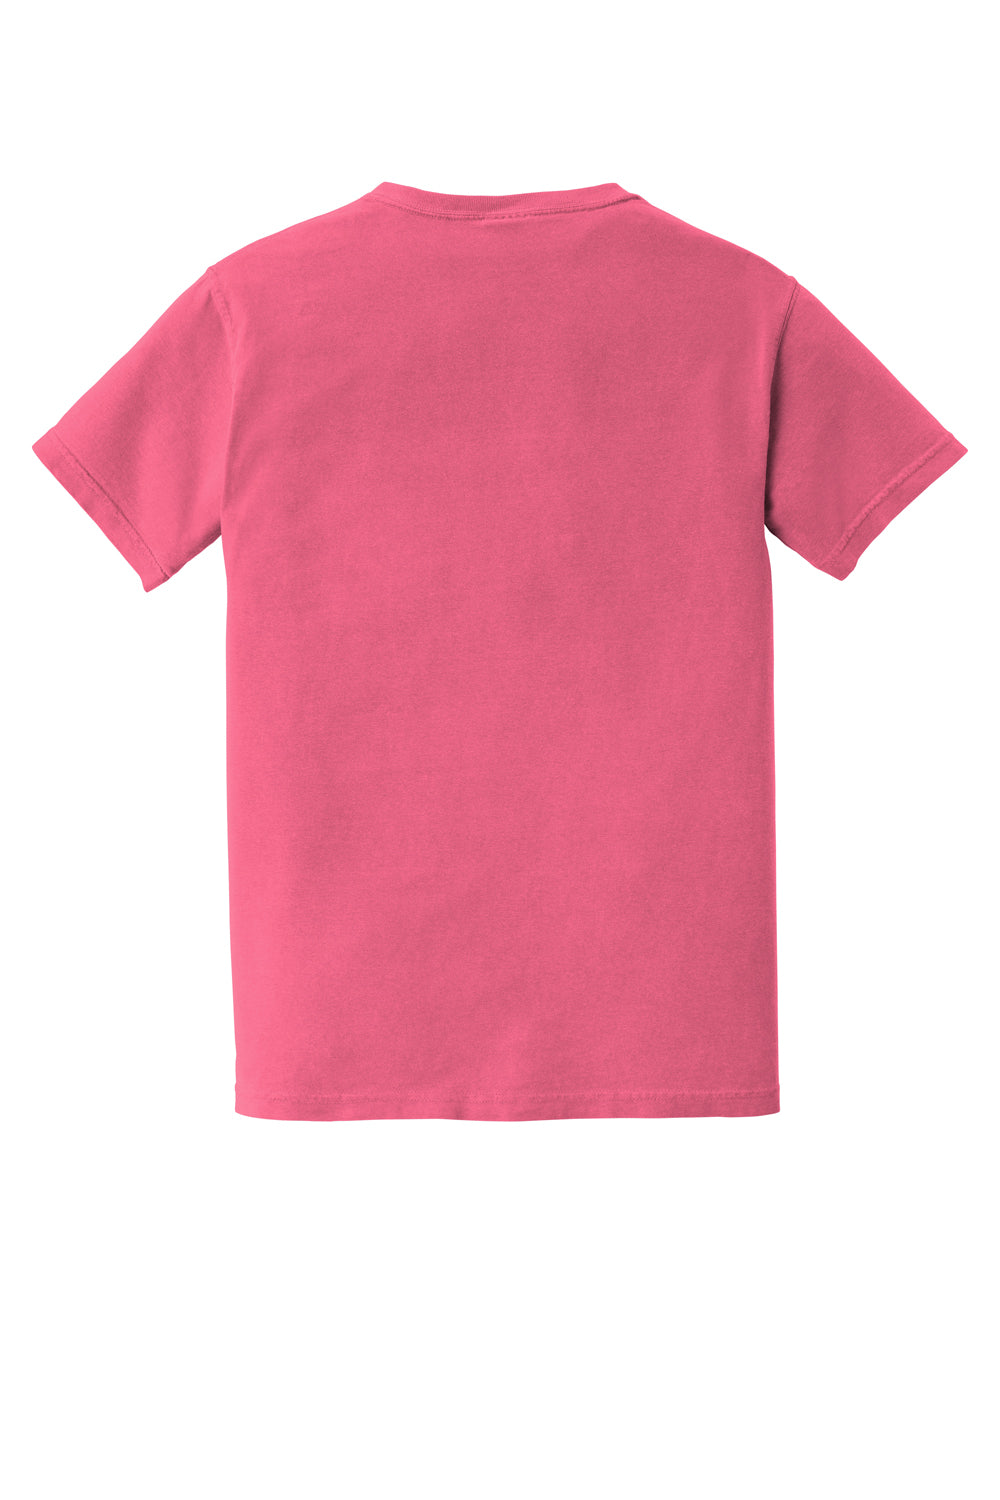 Comfort Colors Mens Short Sleeve Crewneck T-Shirt w/ Pocket Crunchberry Pink Flat Back